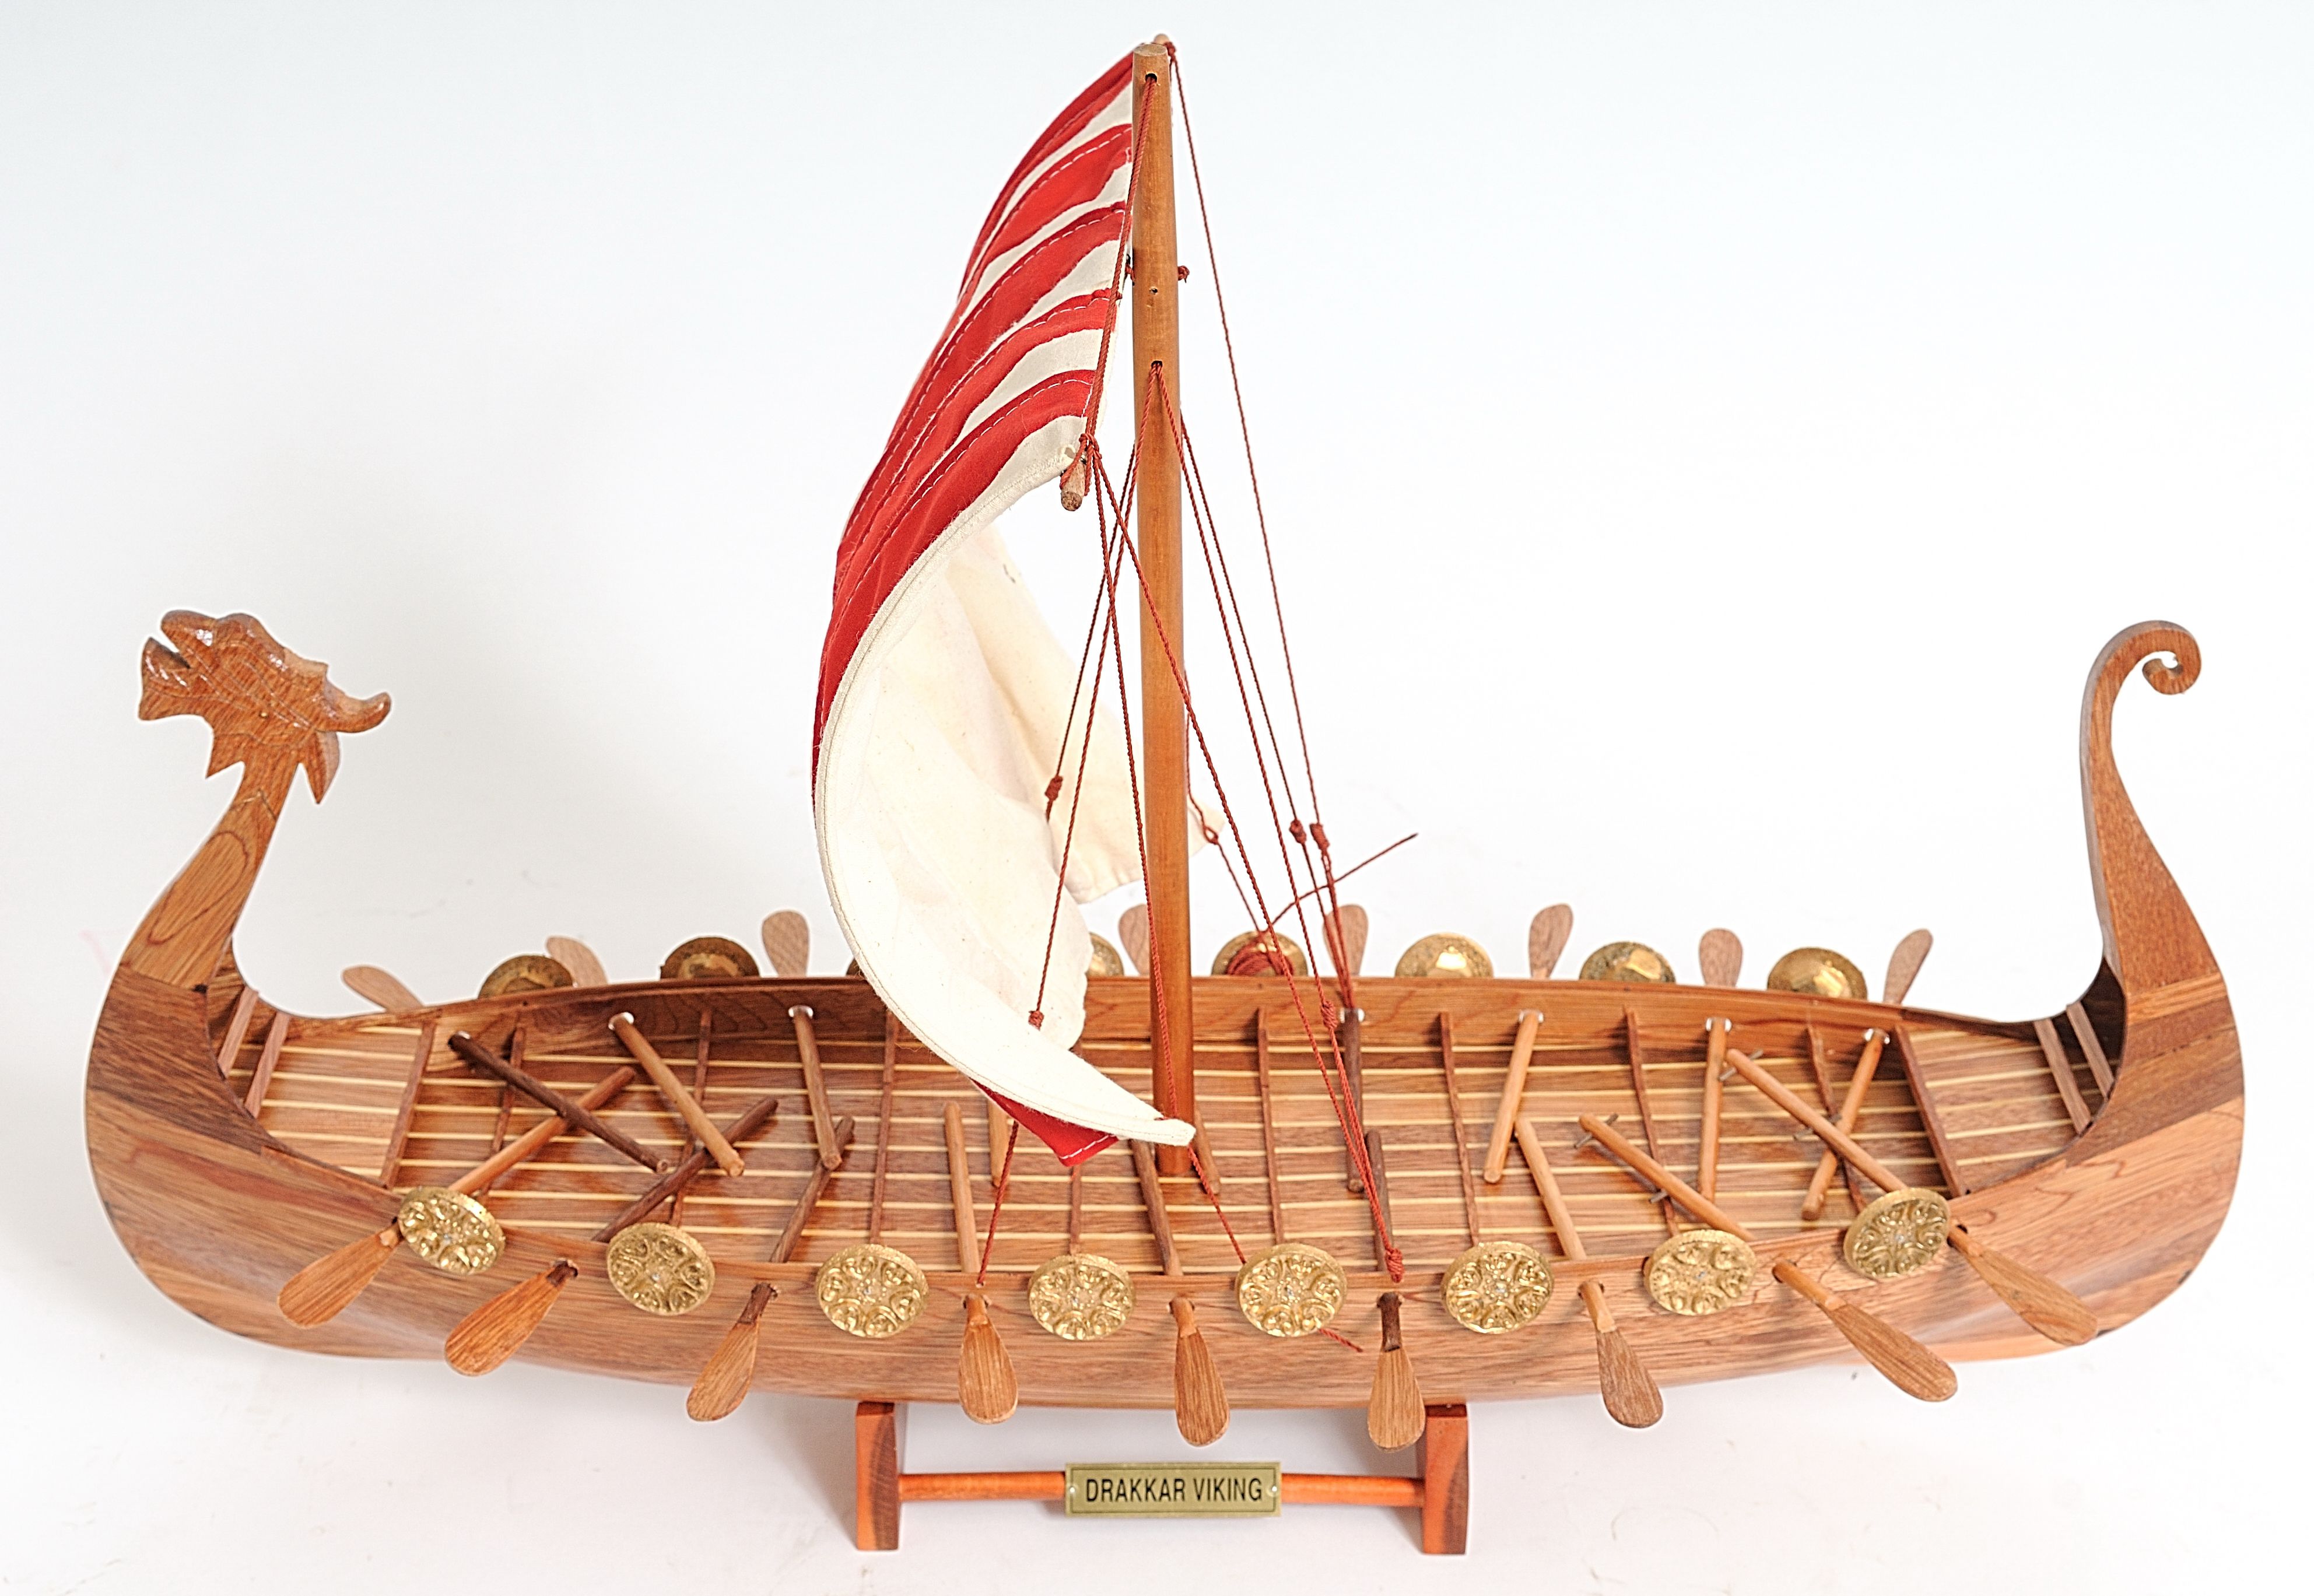 drakkar viking wooden model ship